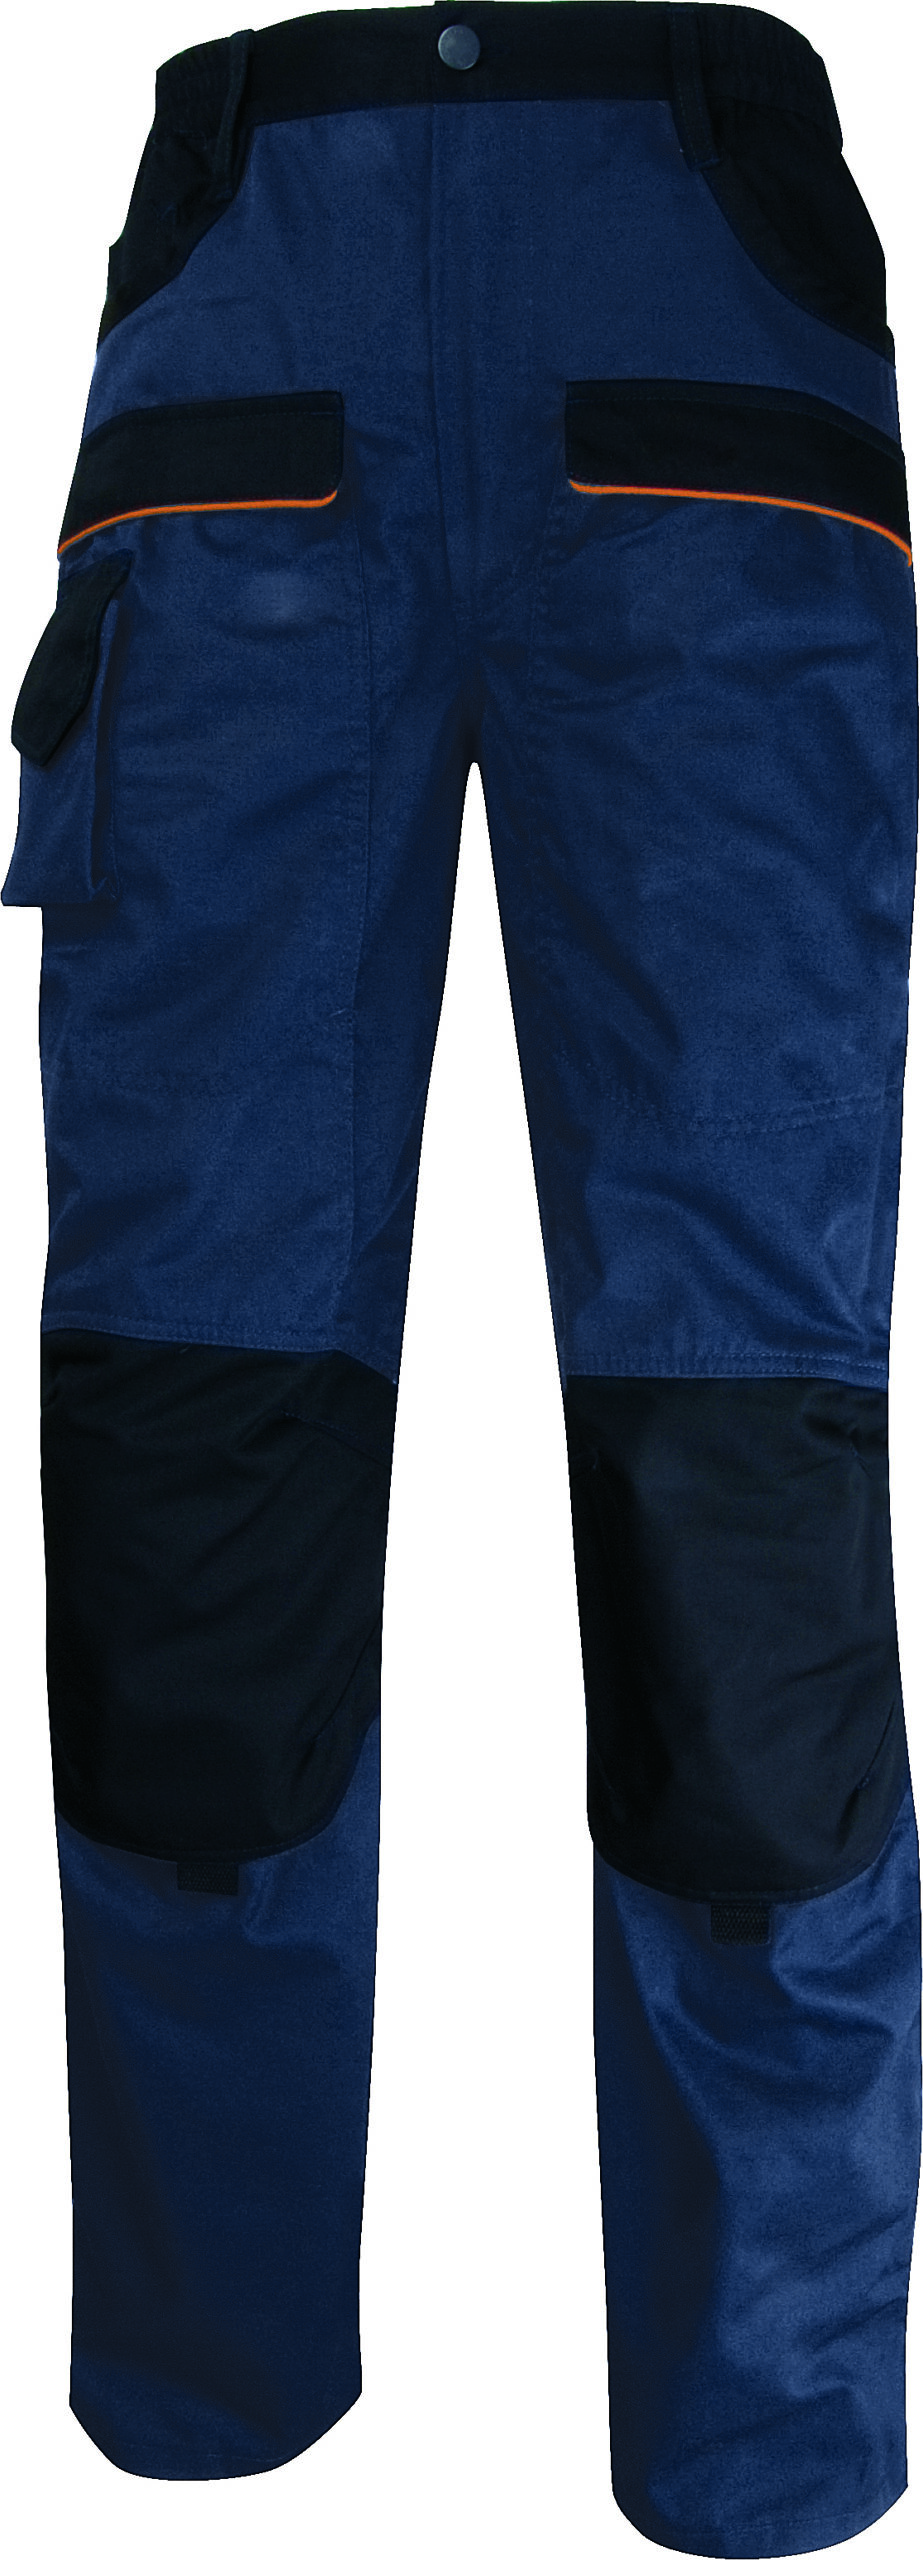 Pantalone da Lavoro Mach 2 Blu Nero Tg L Mcpanbm Gt 3295249129958